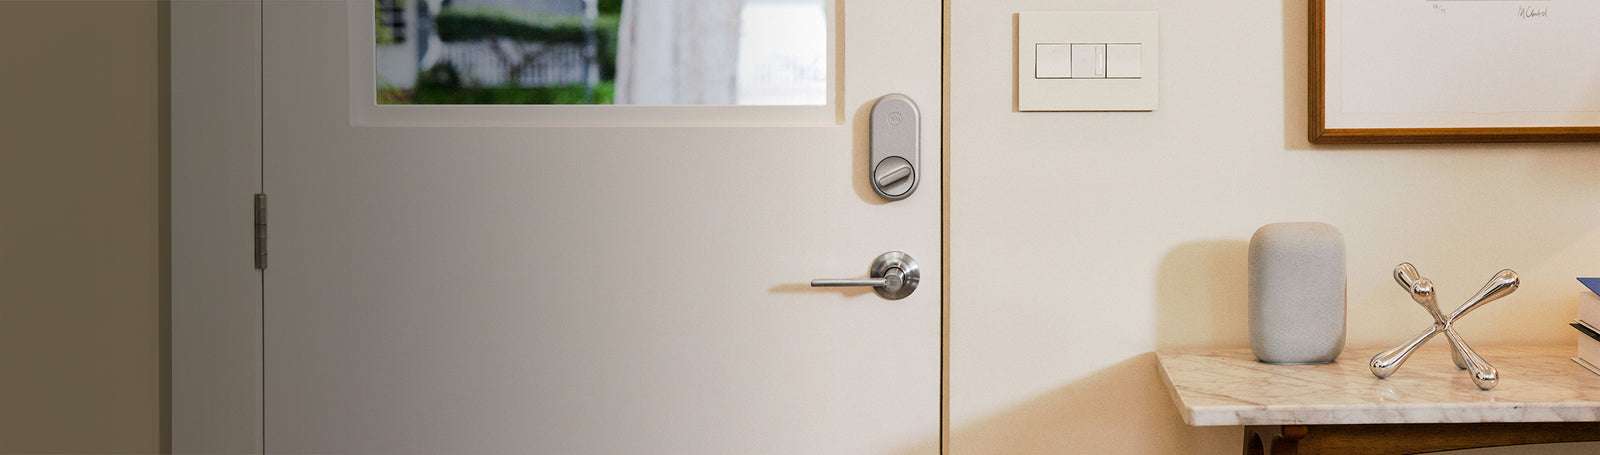 yale lock on a door